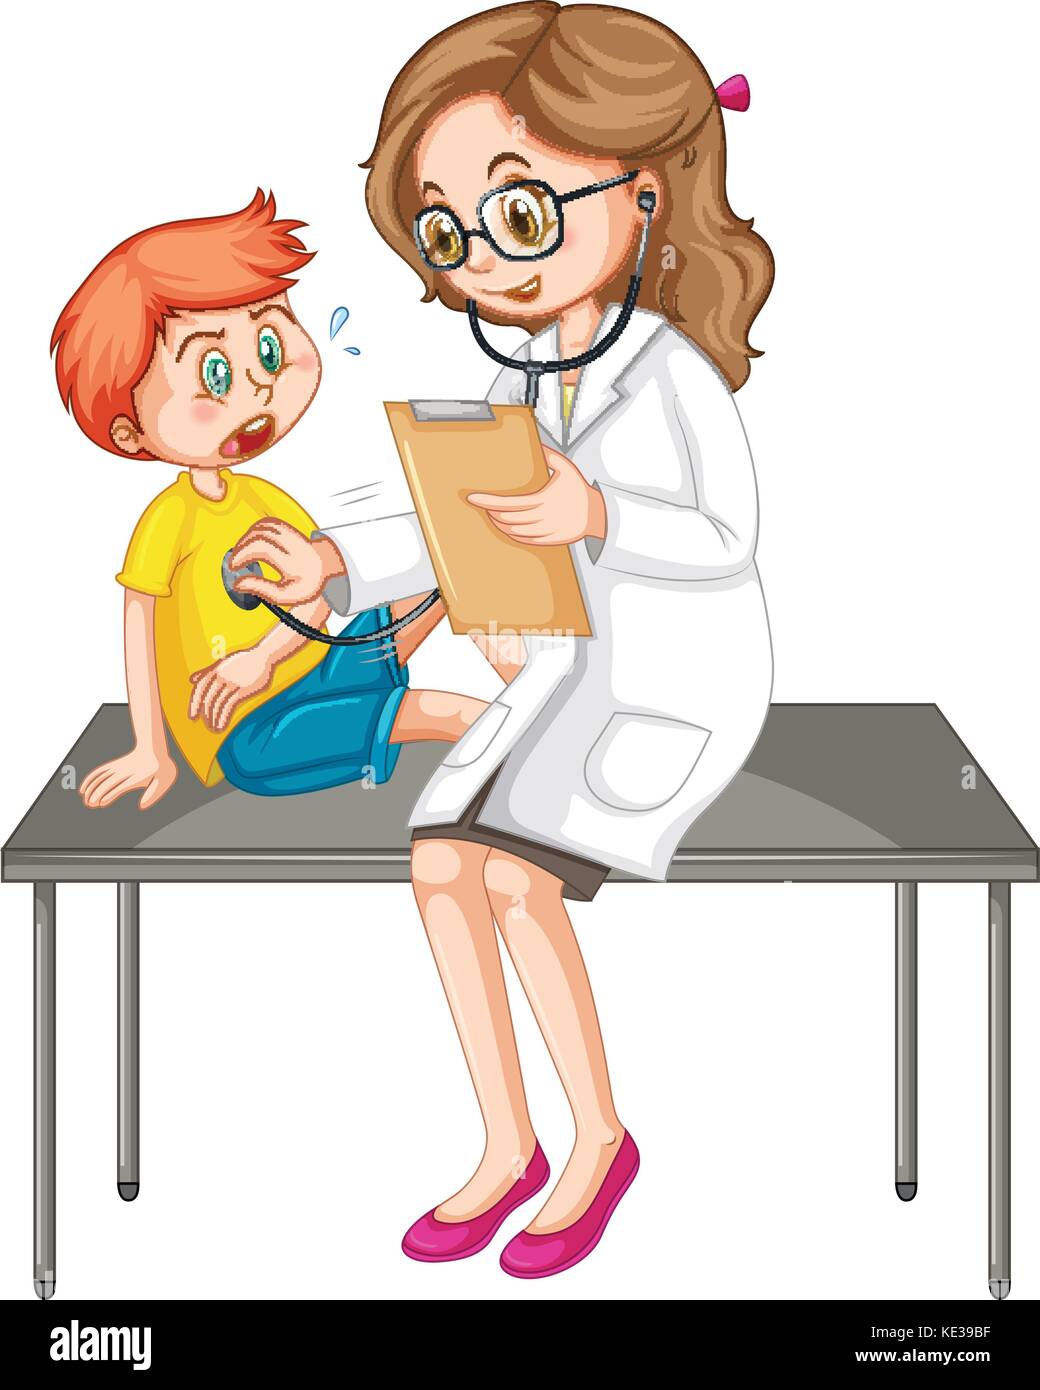 Doctor examining little boy illustration Stock Vector